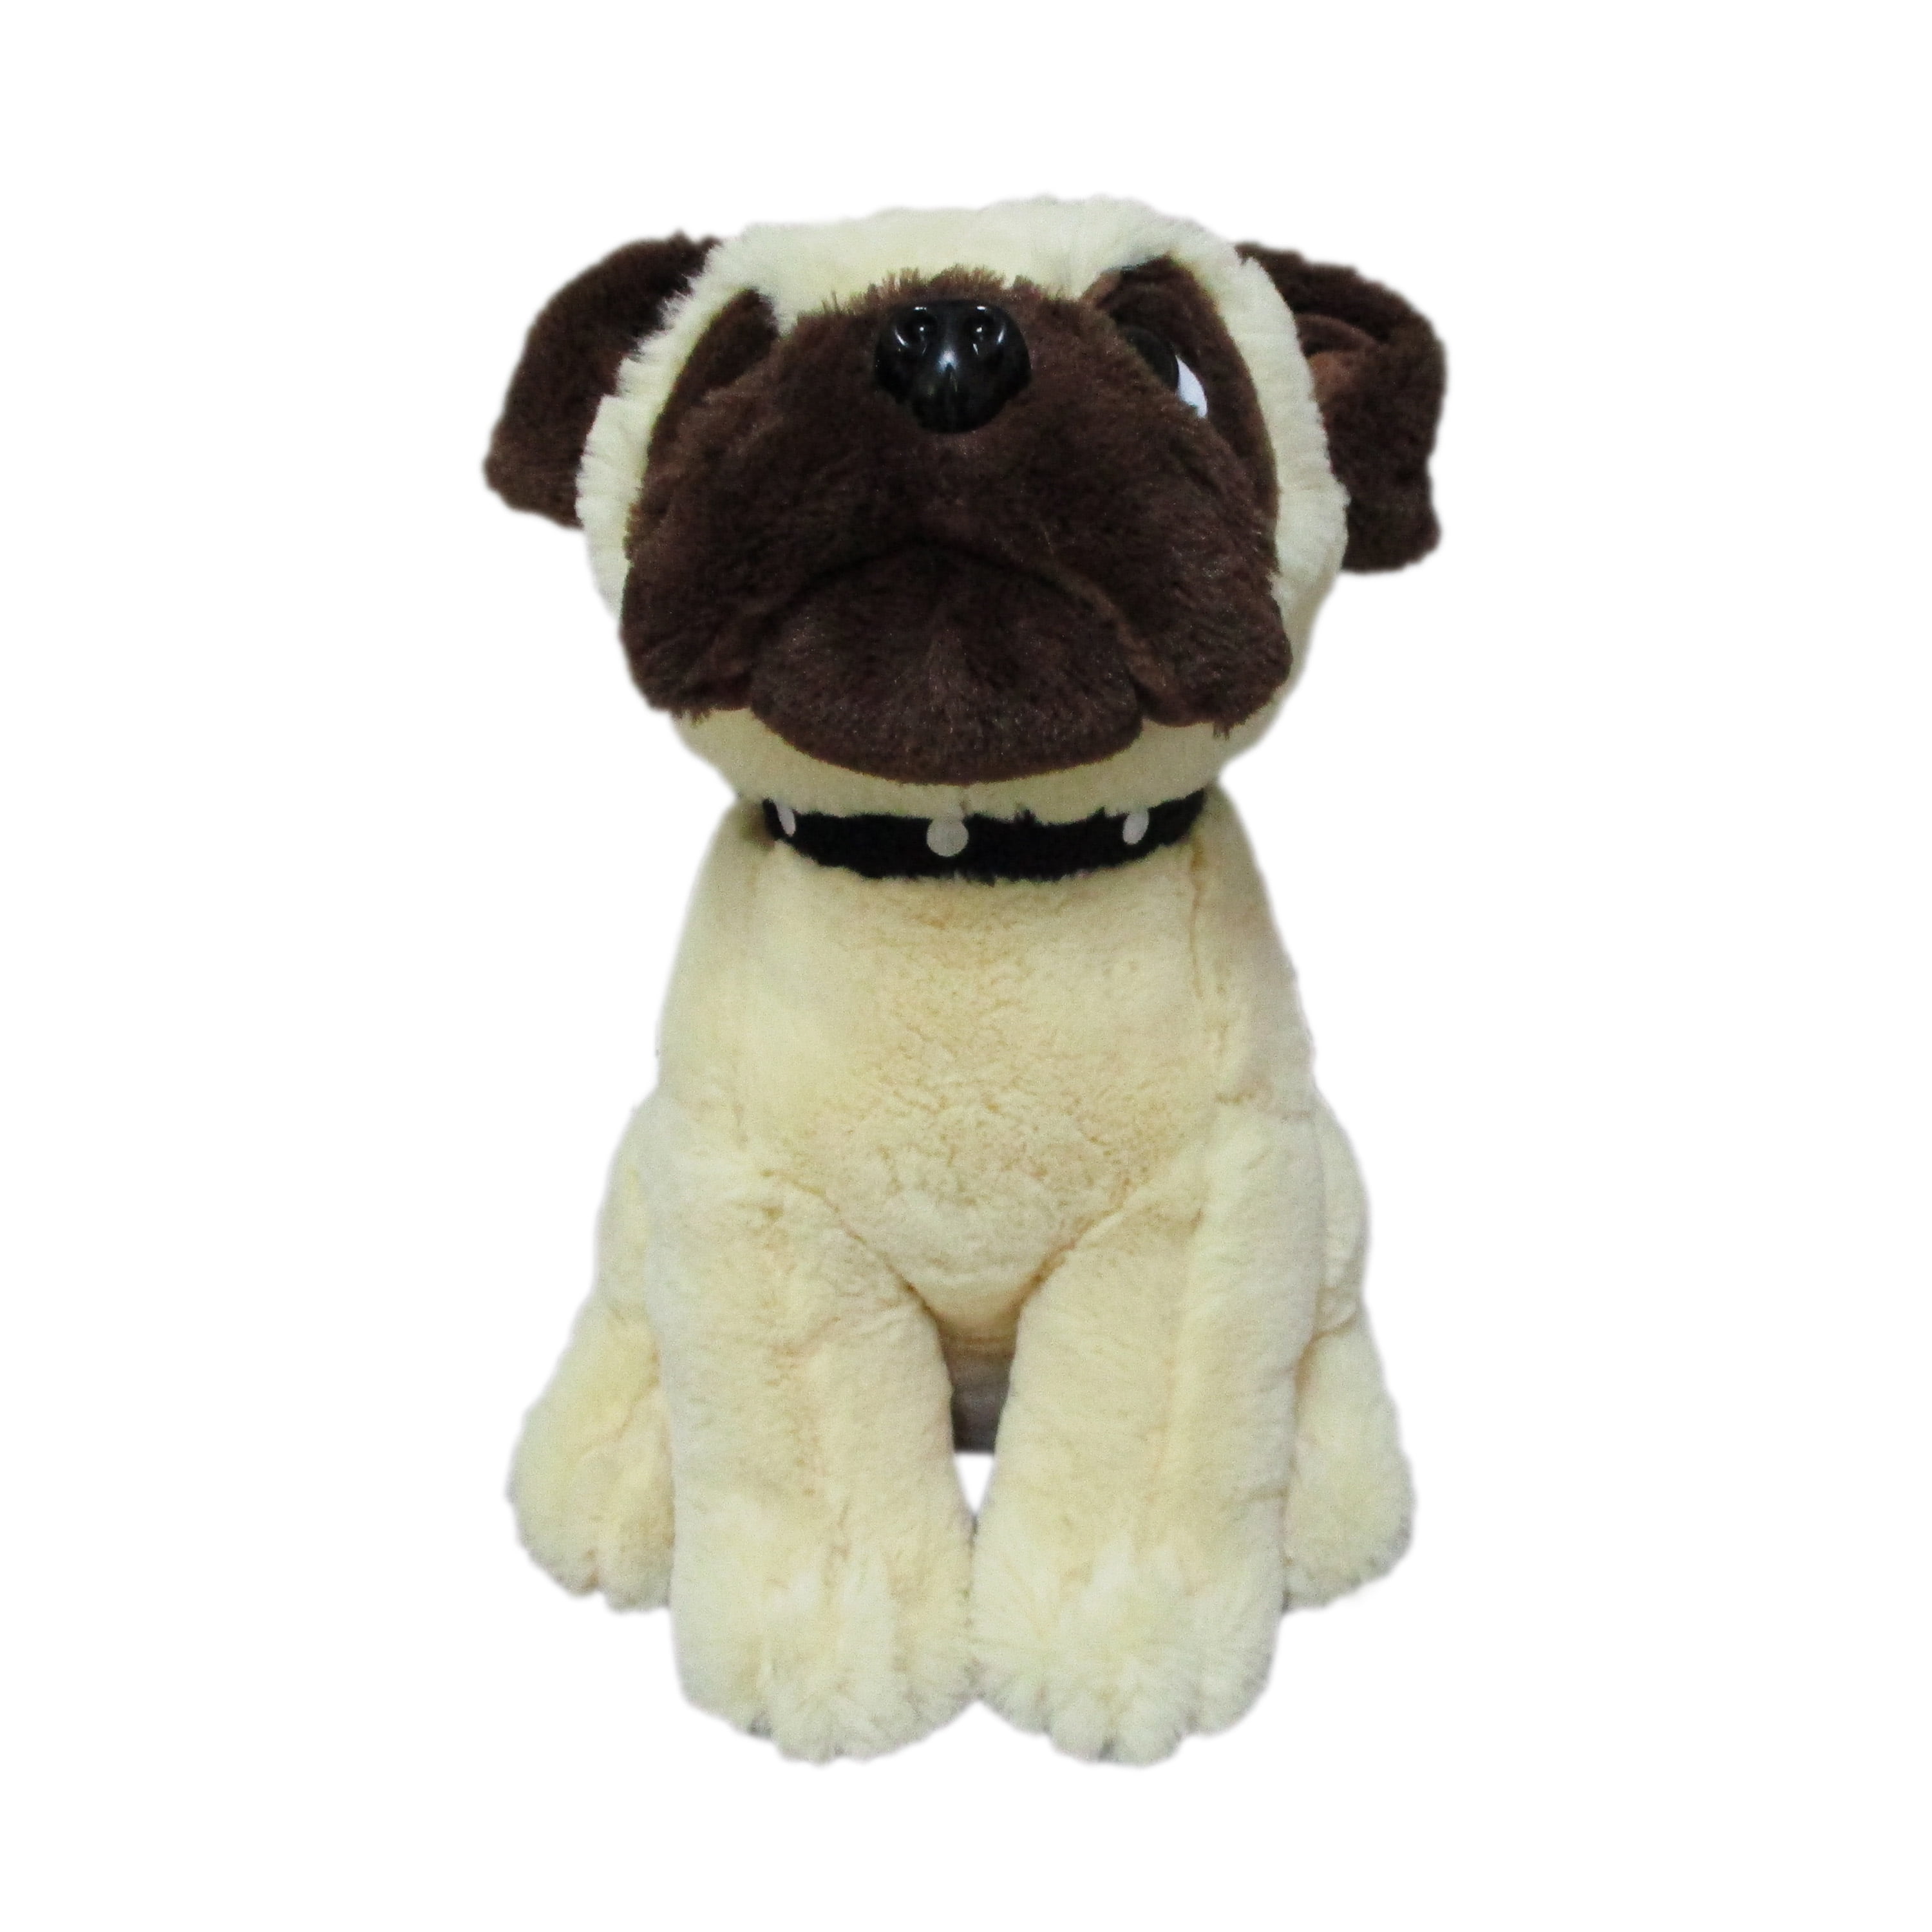 PUGSEE the Pug Dog Aurora World Plush - New Stuffed YooHoo Friends 5 inch 